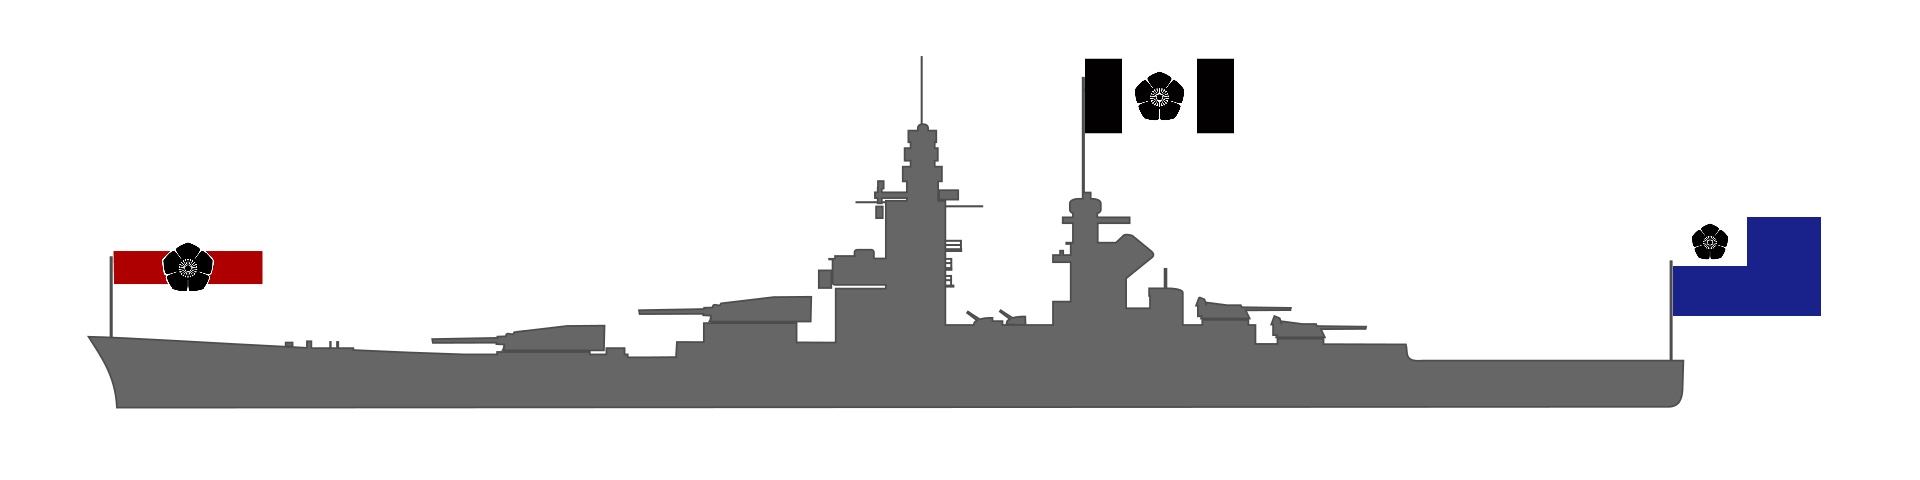 Maritime_flag_template_State_Defense_Force.jpg